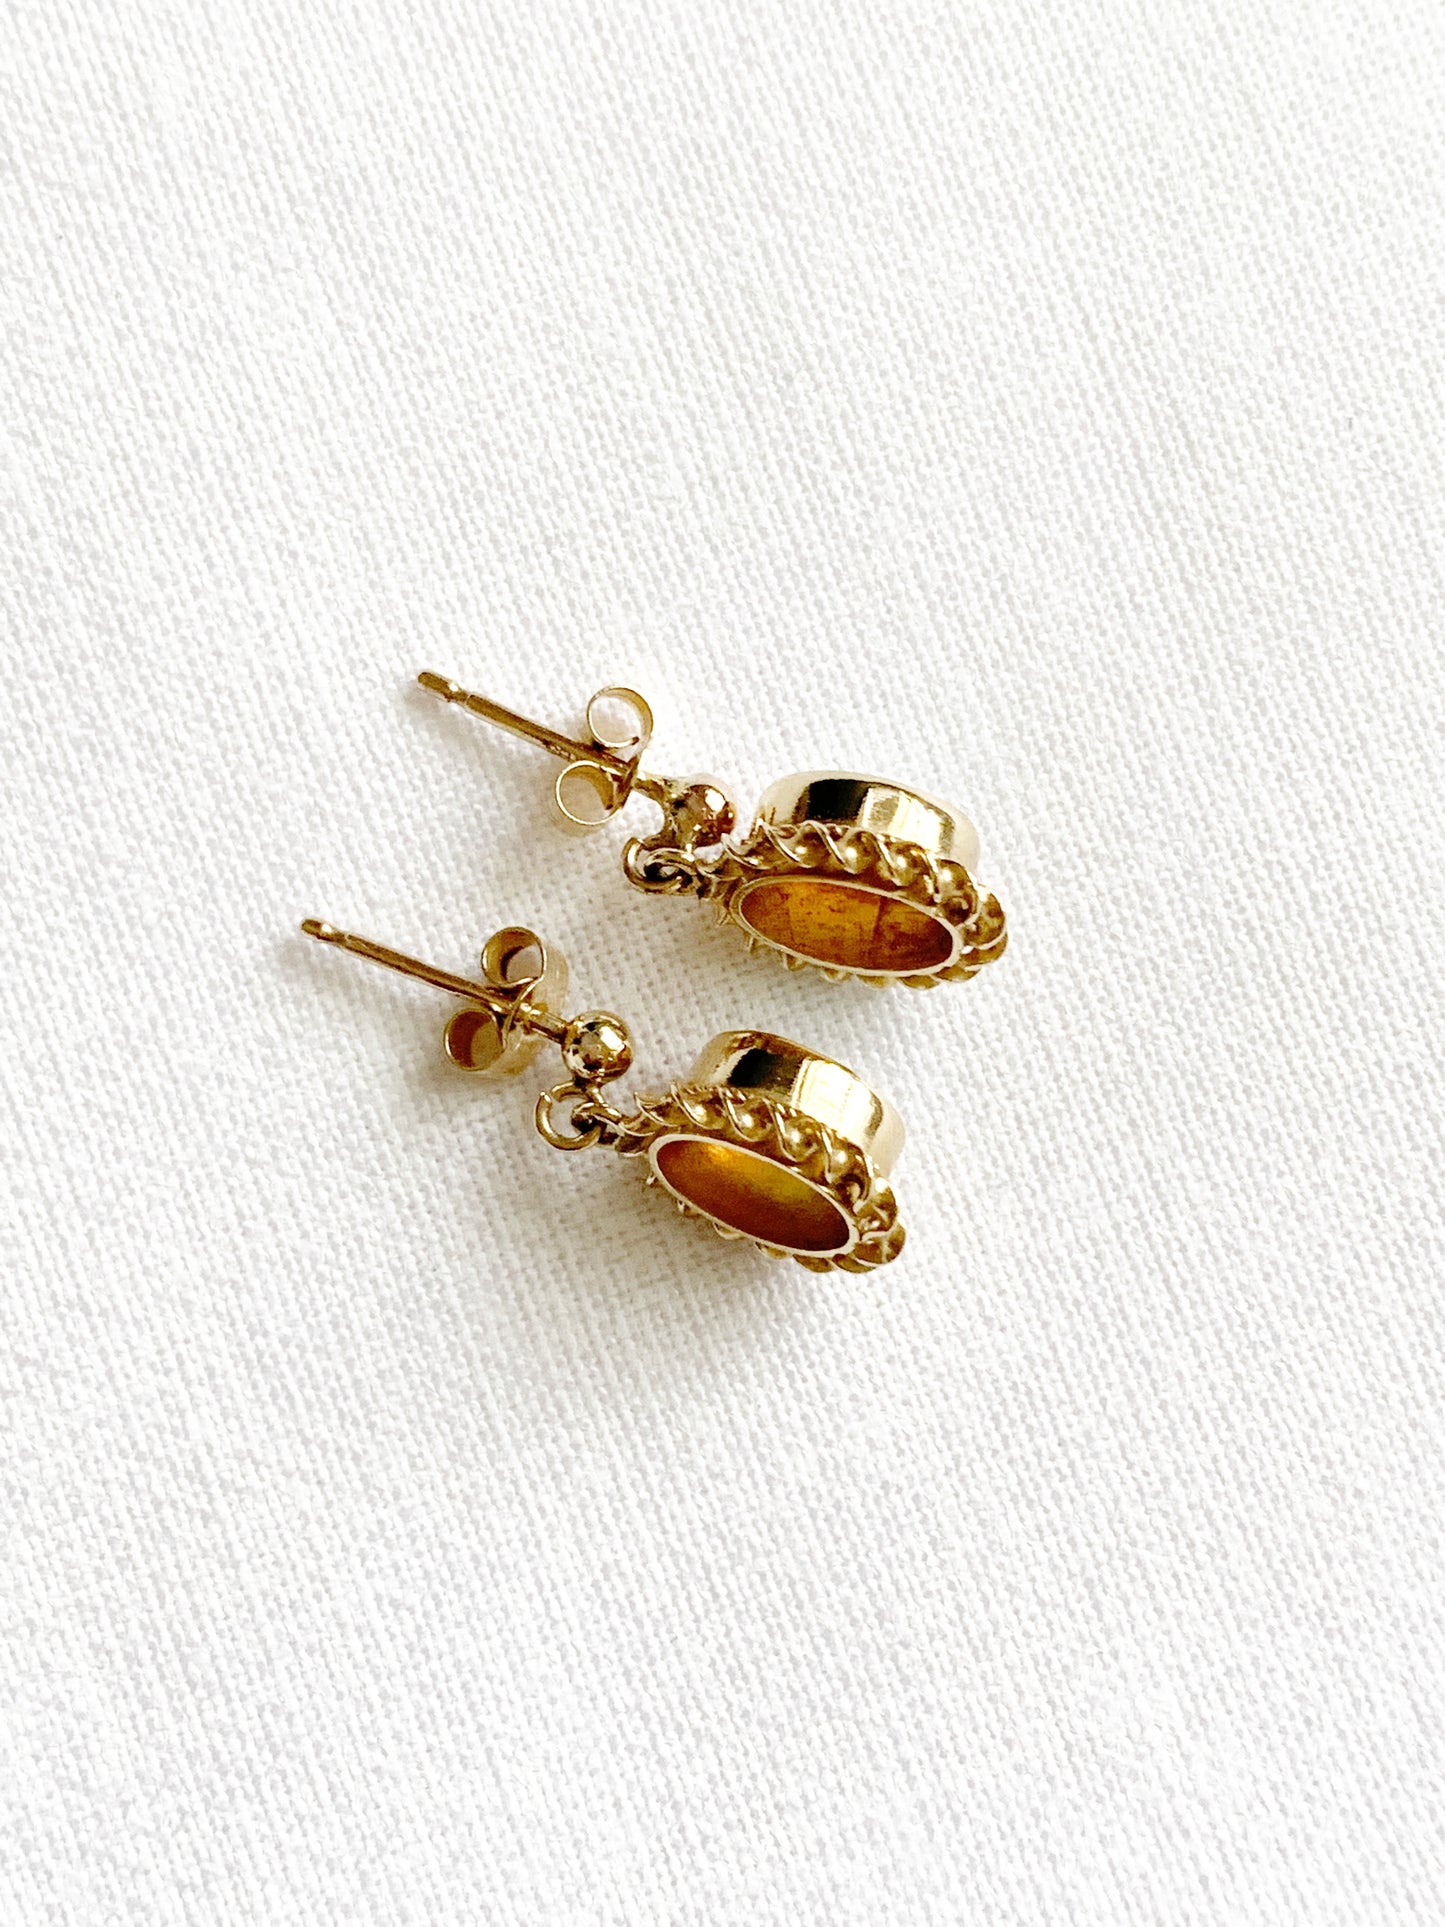 Vintage 9ct Gold Opal Dangle Earrings 1986